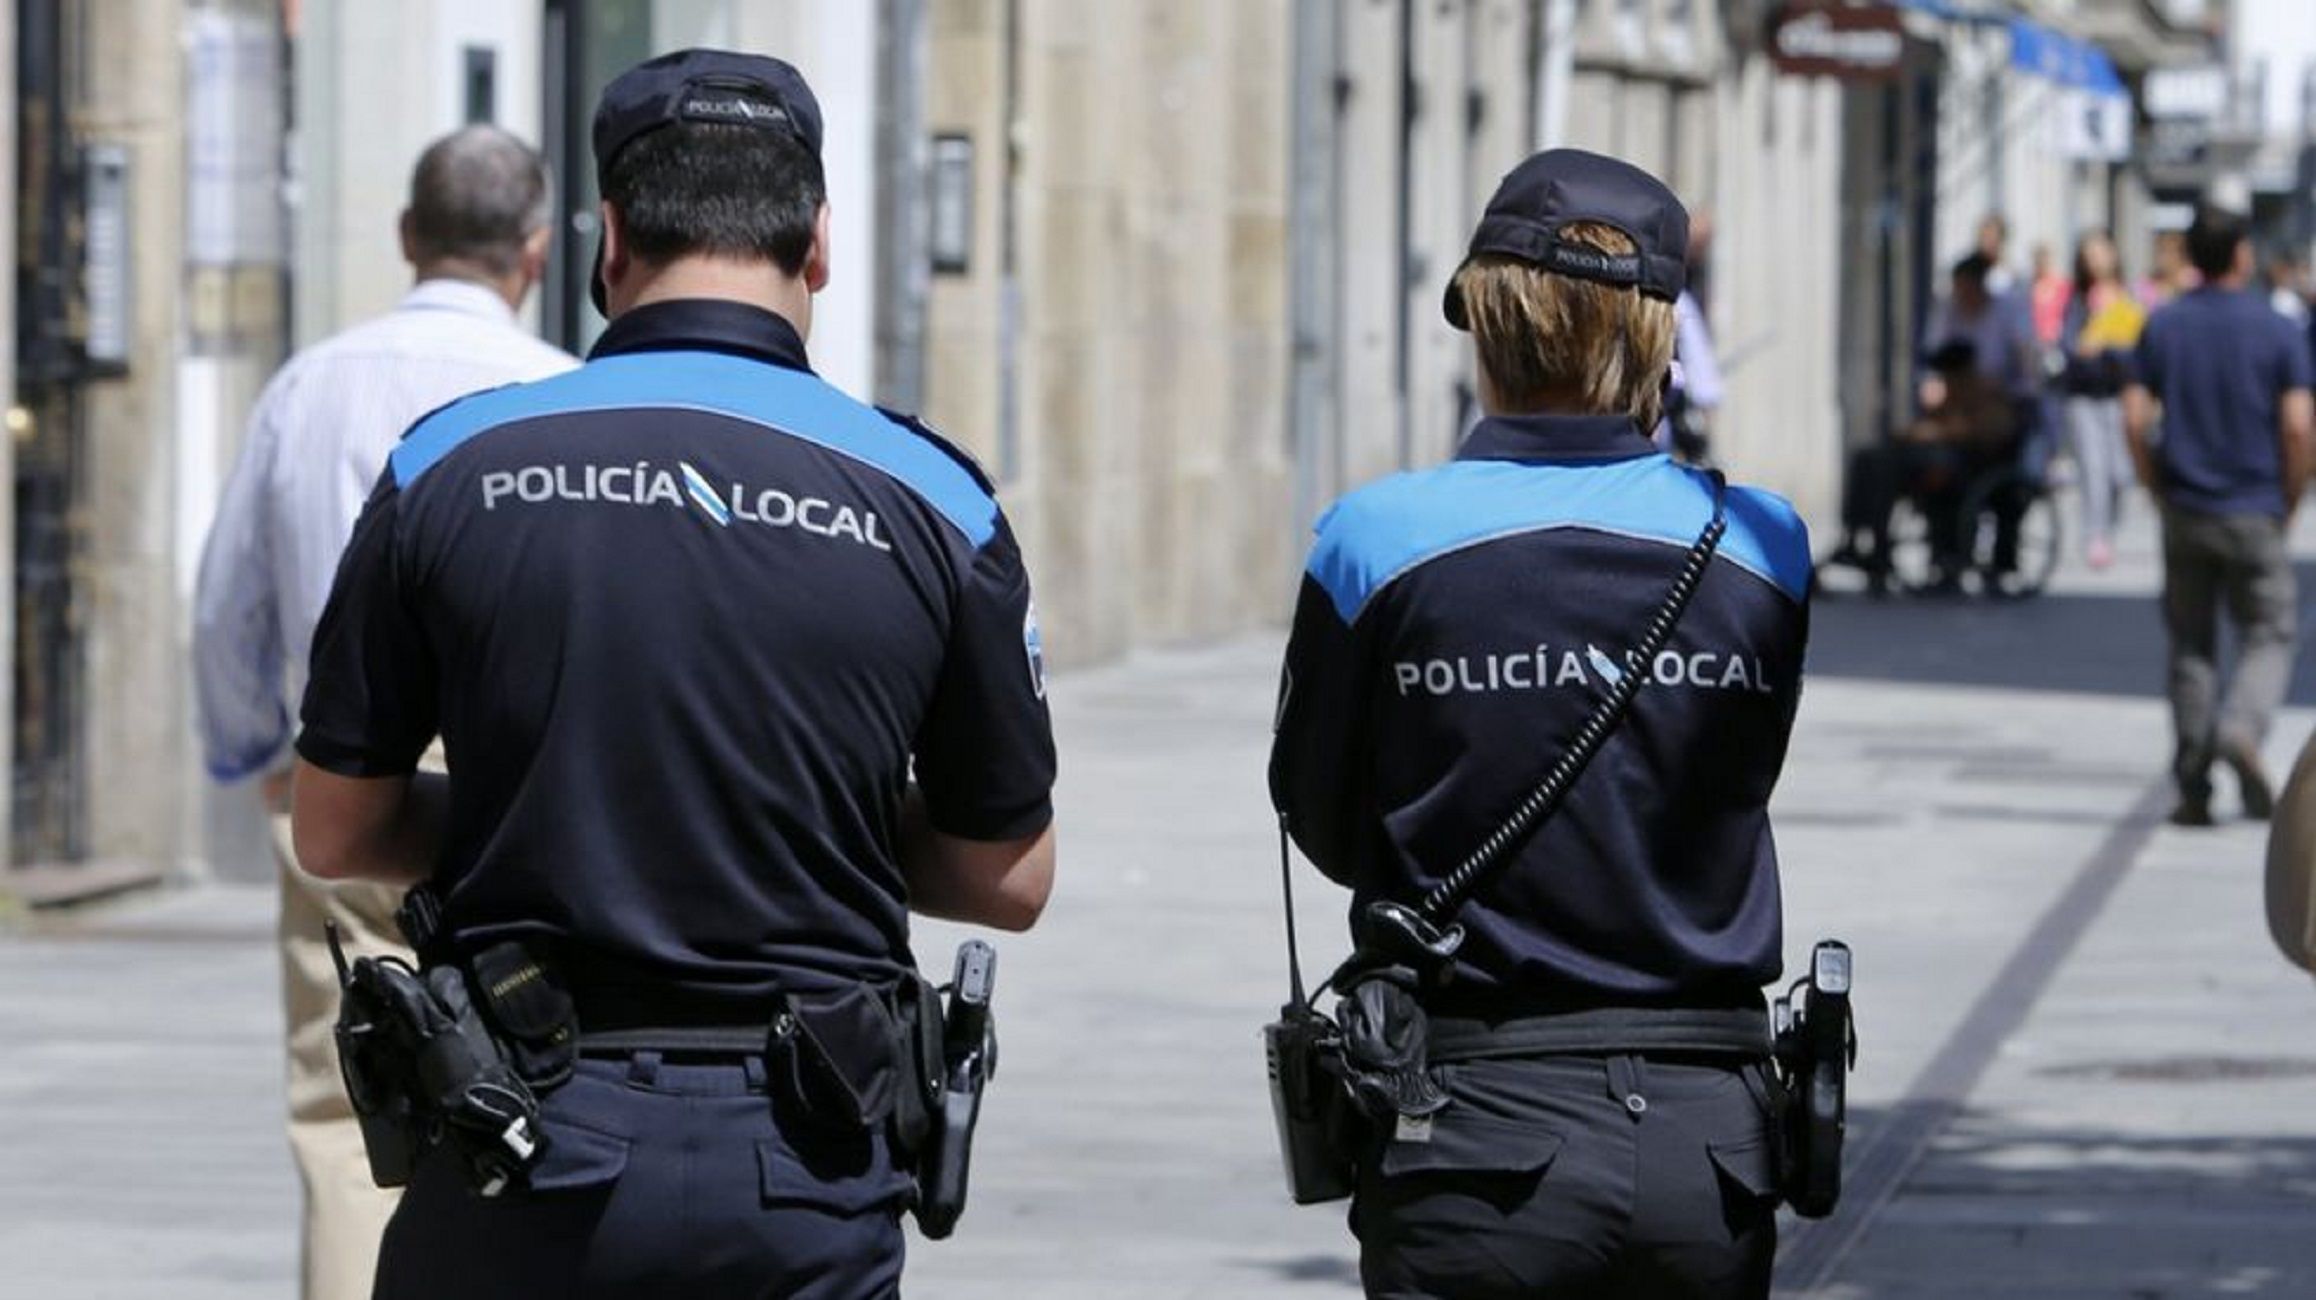 Policia local Galicia / Pixabay